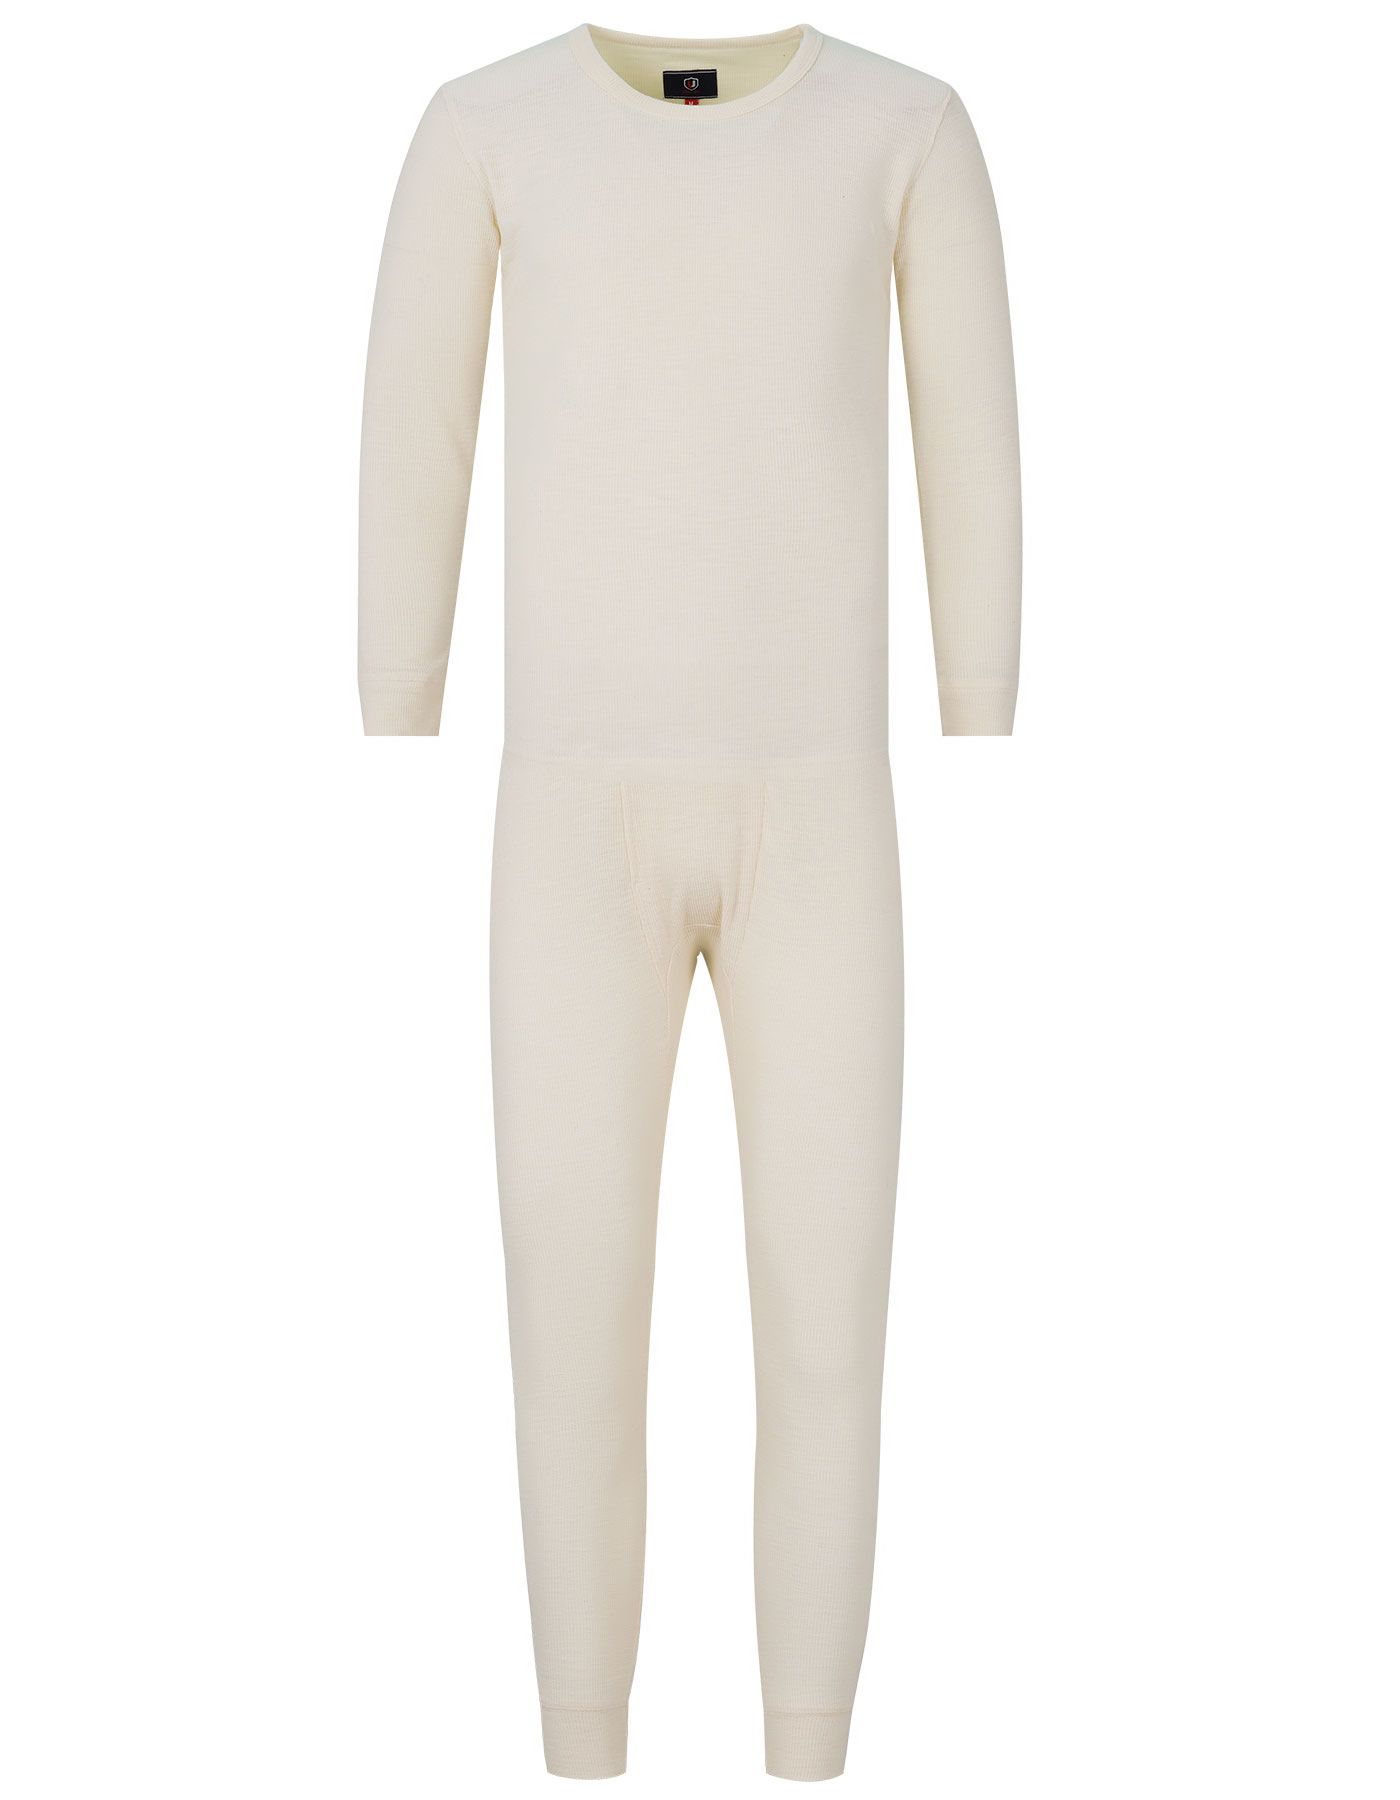 Body Warmer Suit Off White LTP2310-6T Thermal Suit Uniworth